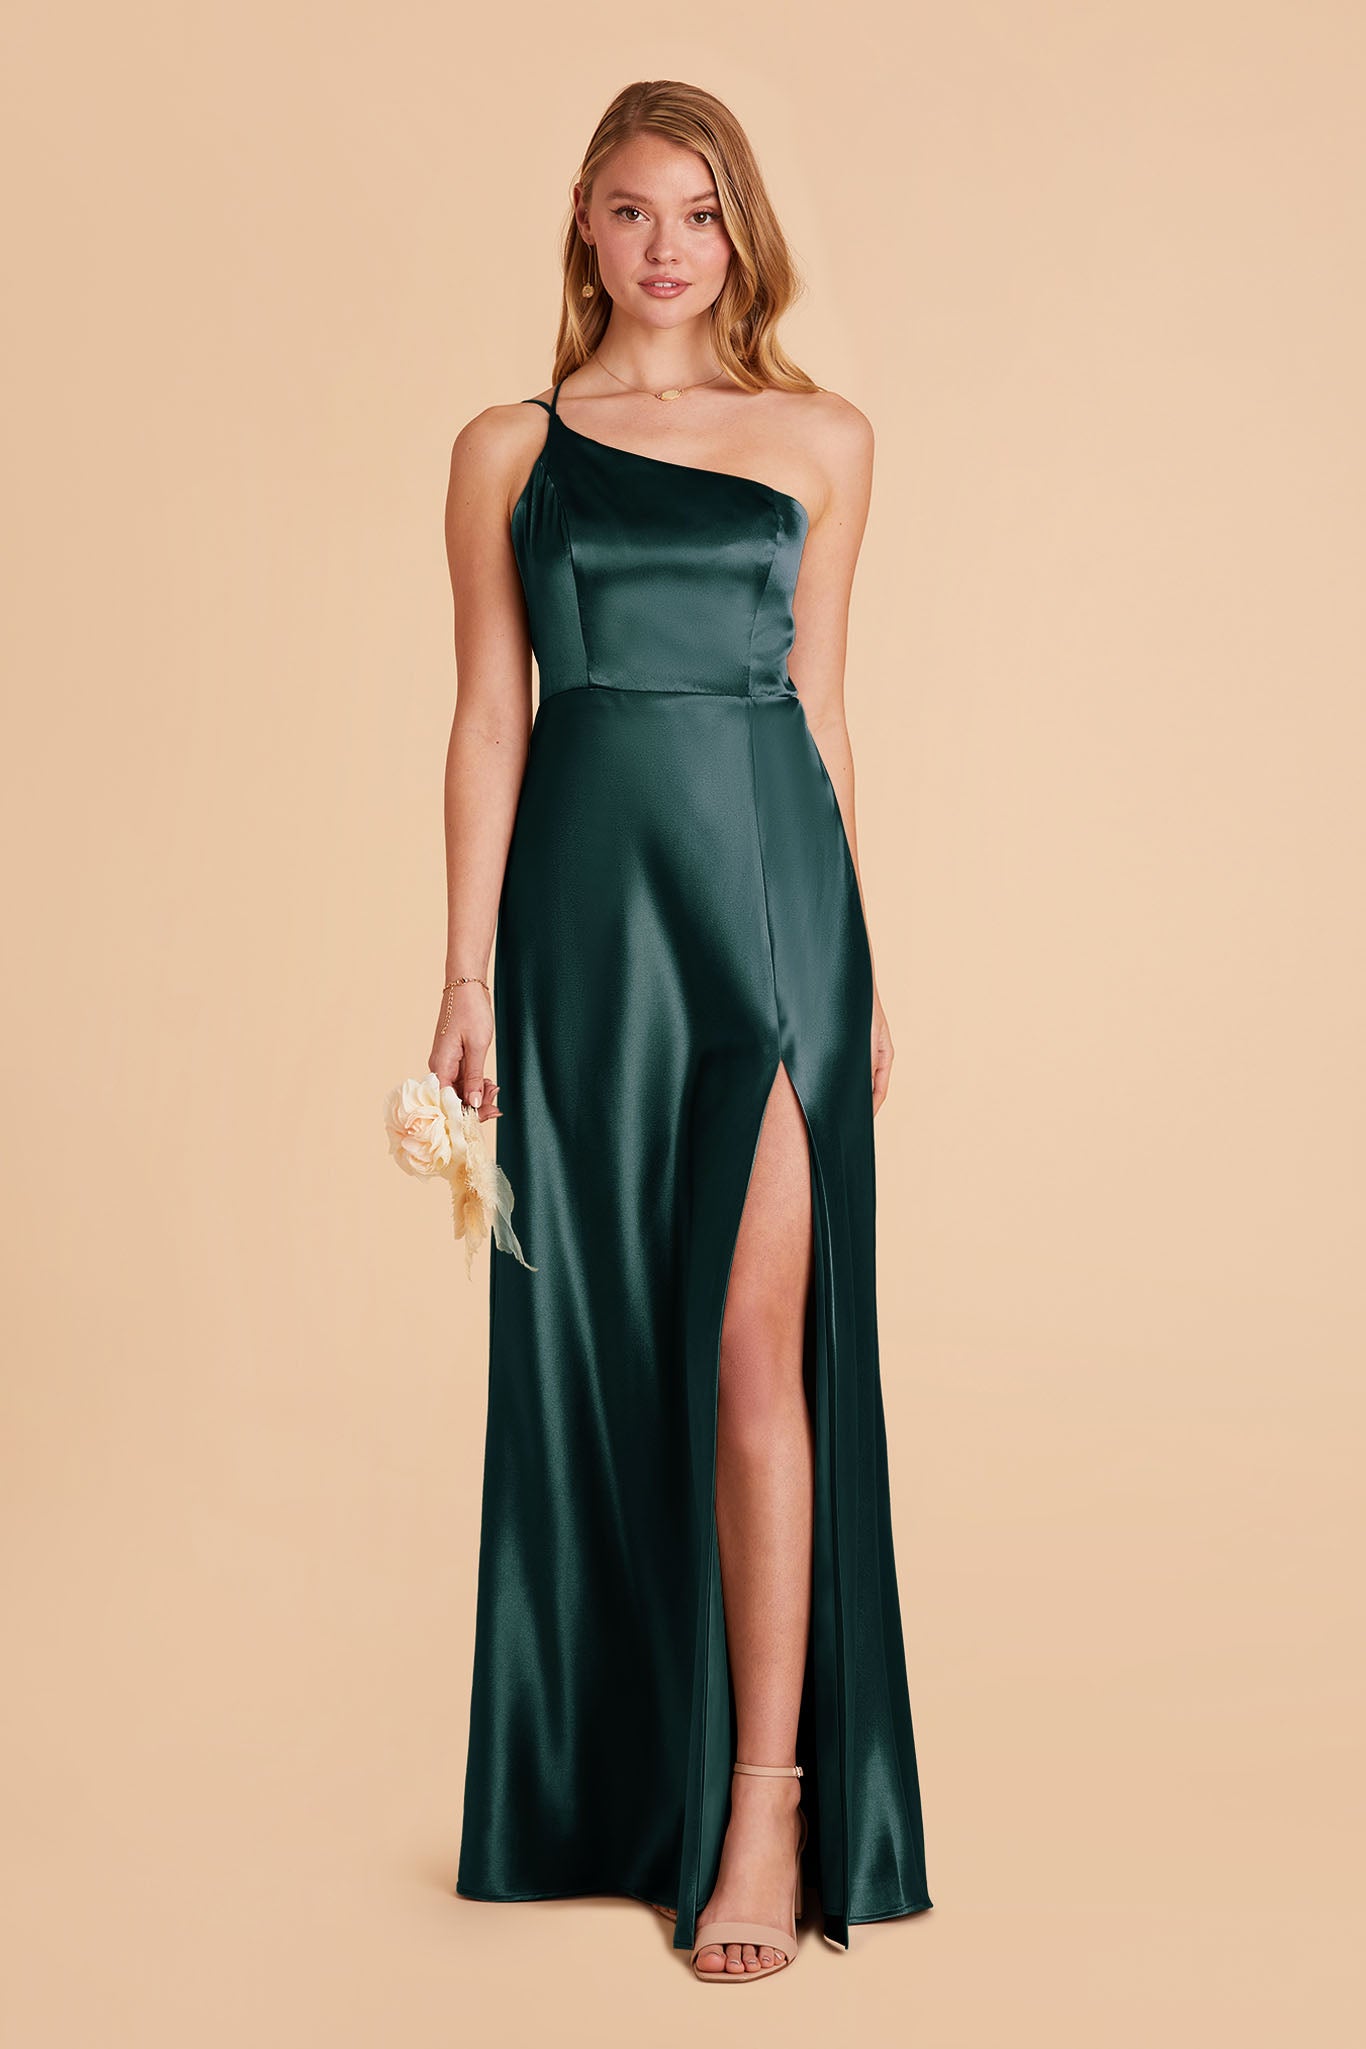 Emerald Kensie Dress by Birdy Grey